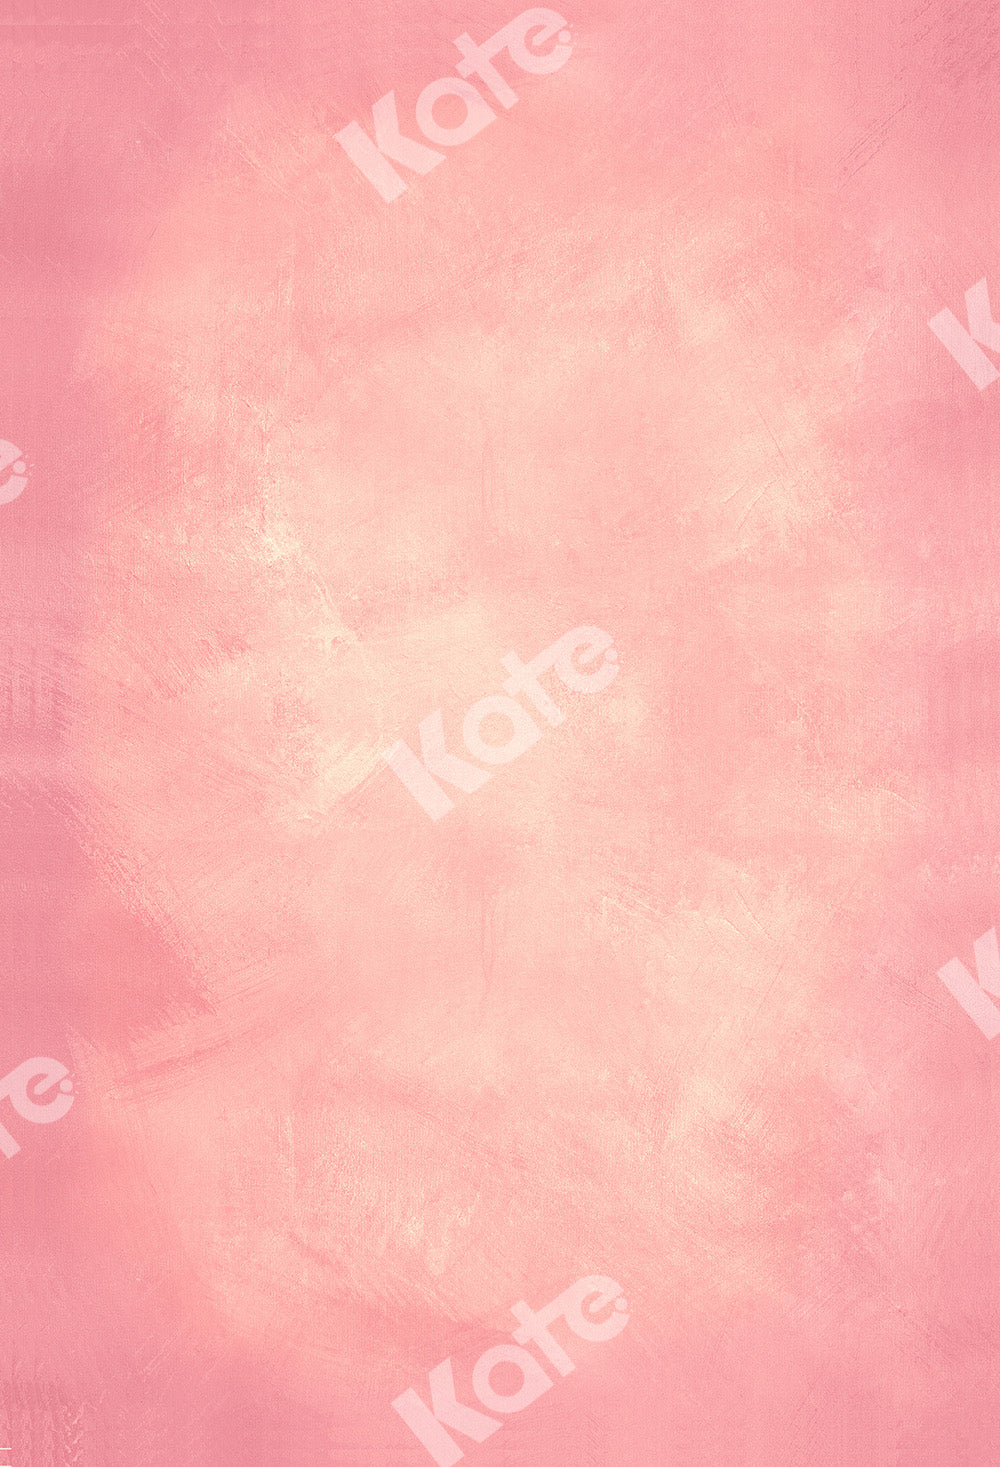 Kate 抽象的なピンクの肖像写真の背景